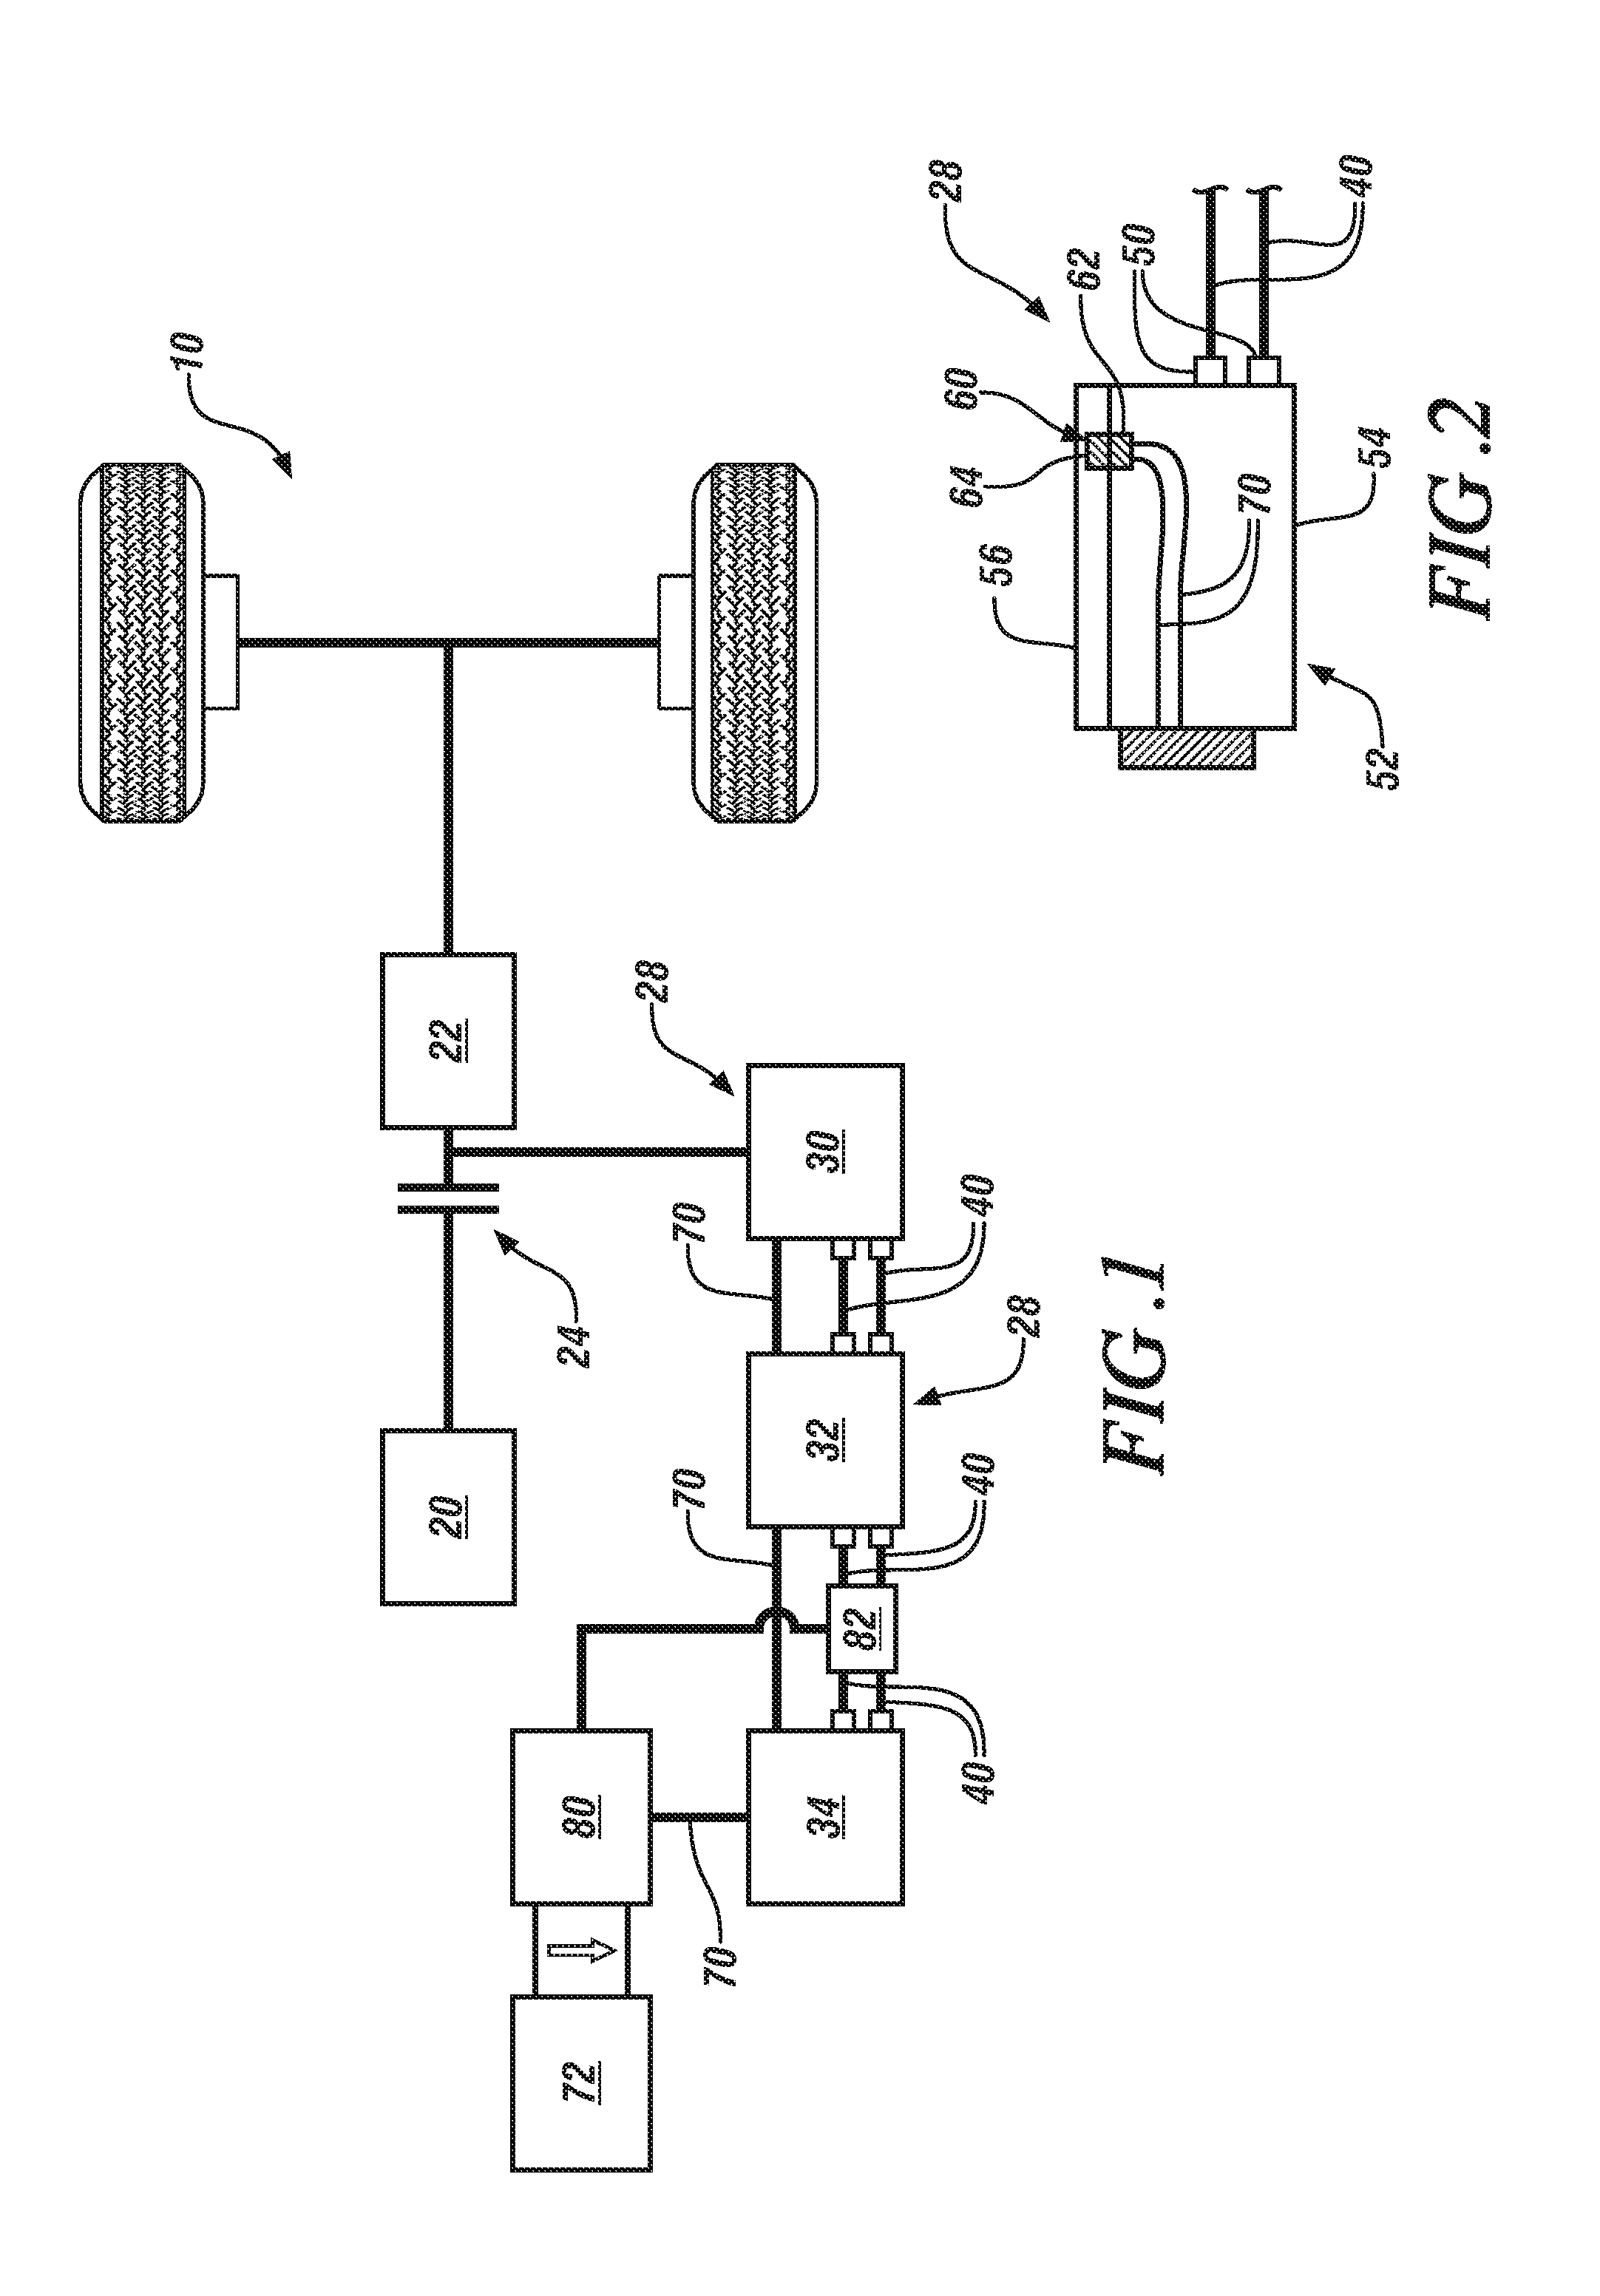 High-voltage interlock loop ("hvil") switch having a reed relay